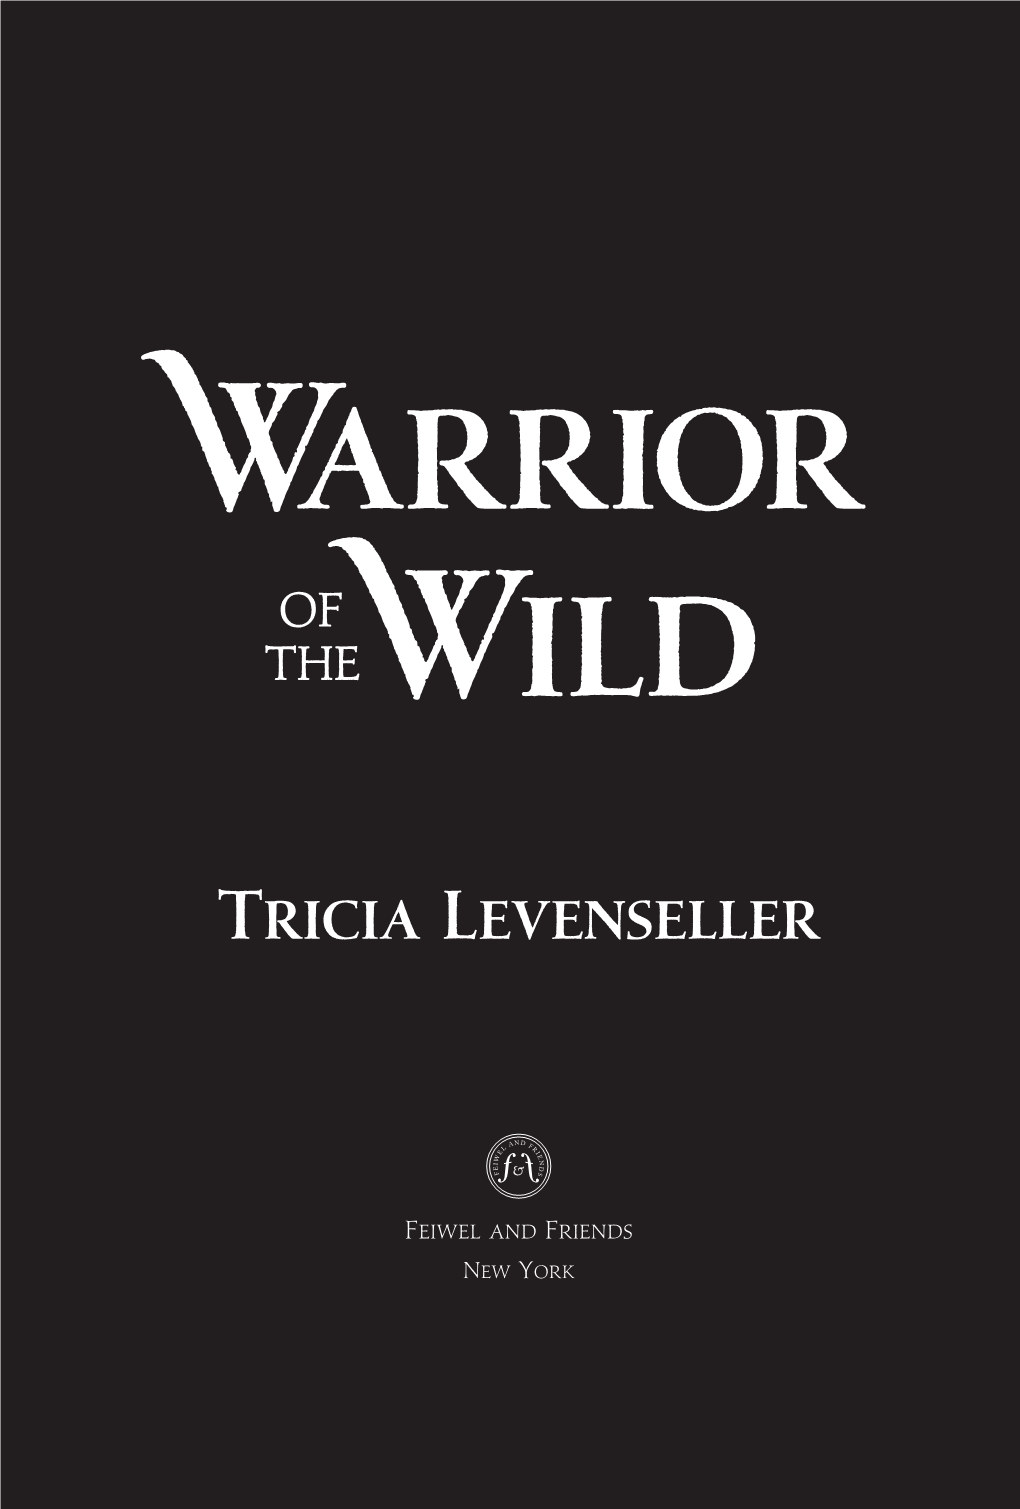 Tricia Levenseller